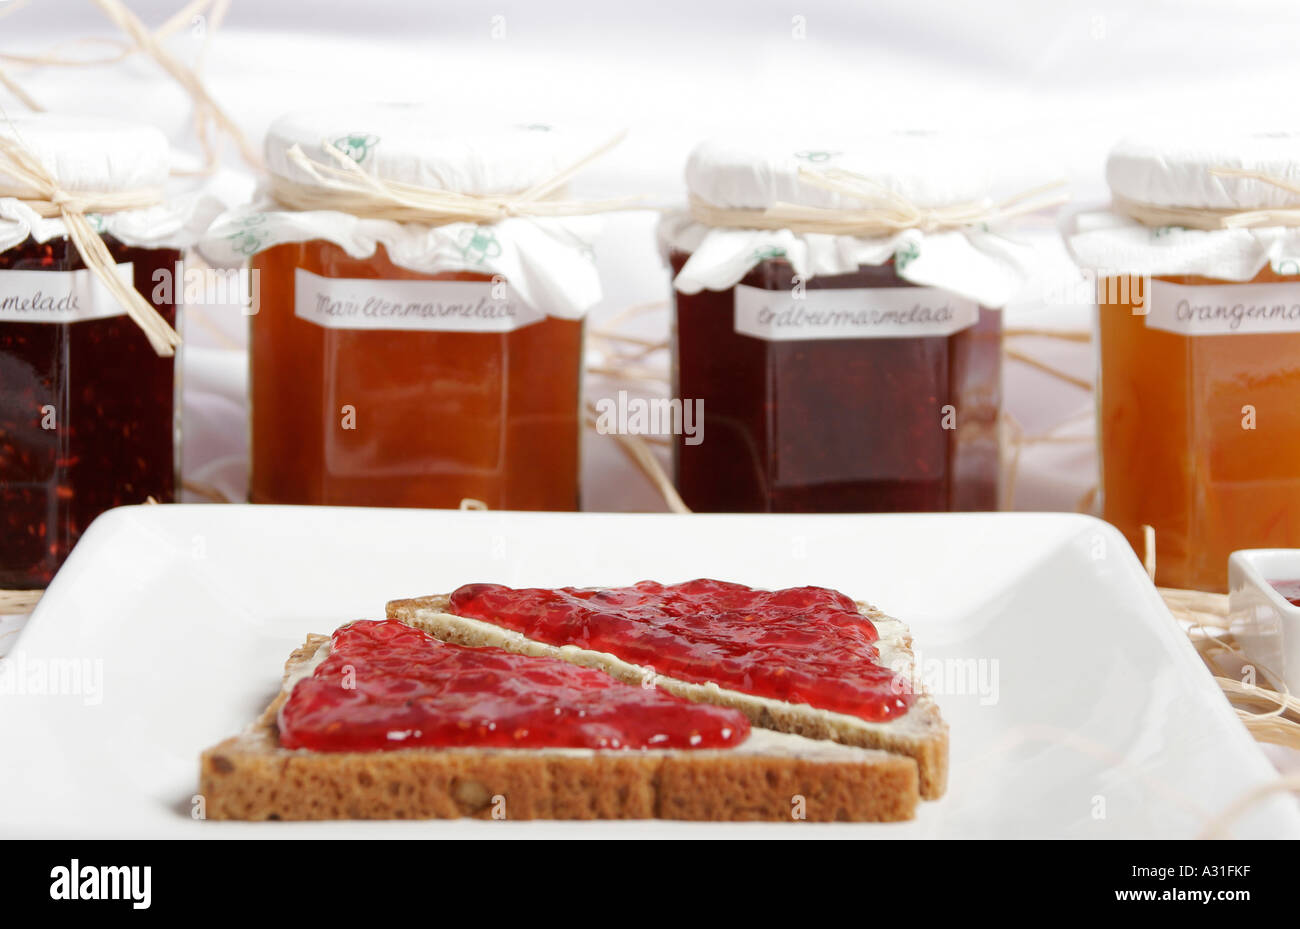 Slice of jam bread and marmalade jars Stock Photo